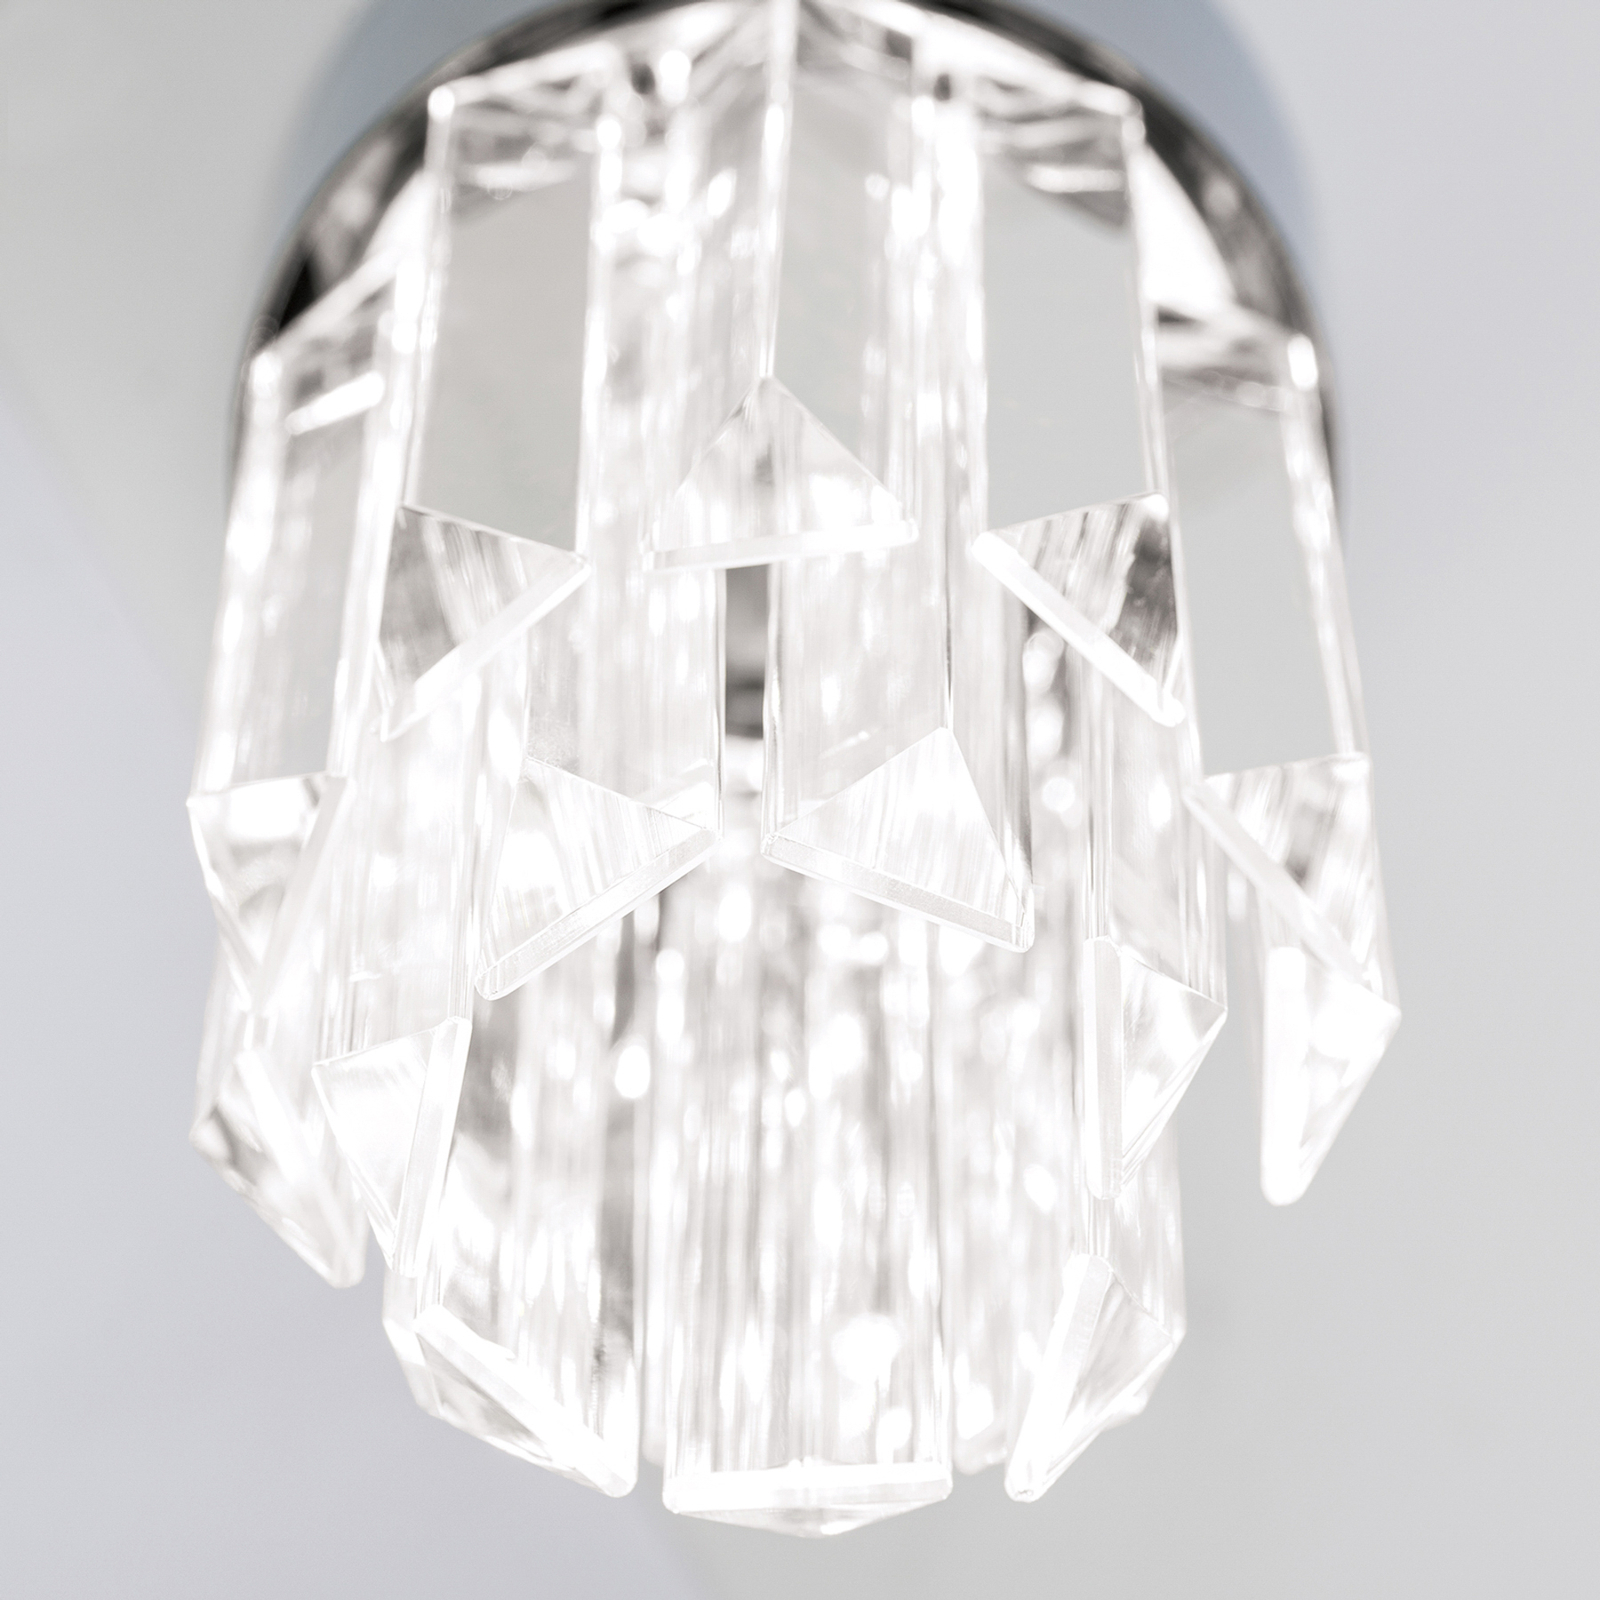 Plafoniera LED Prism, cristallo, Ø10cm cromo